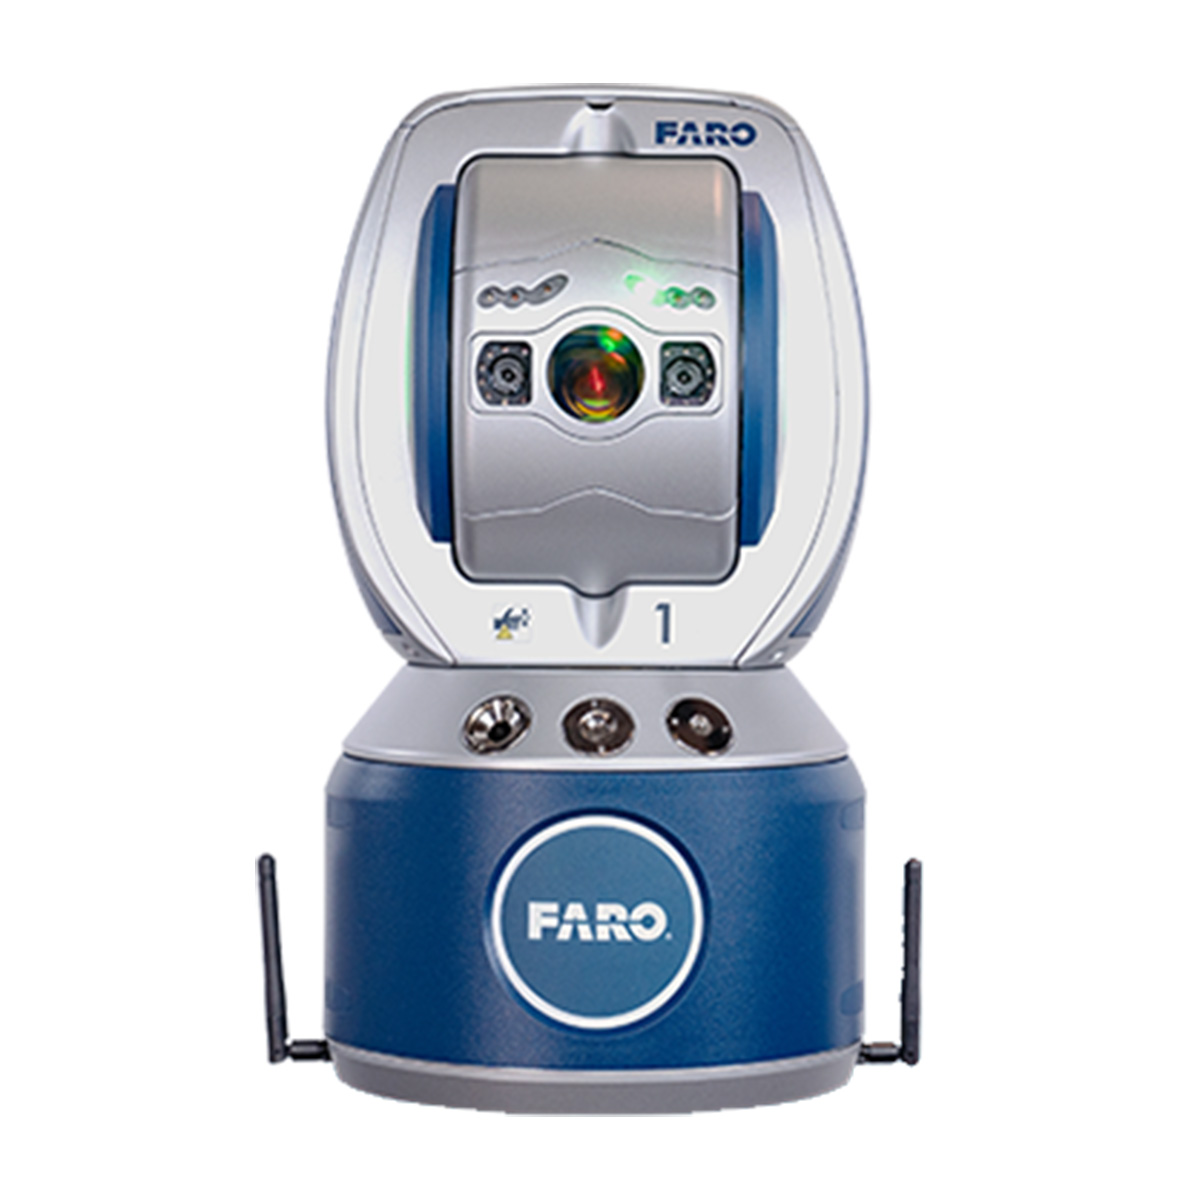 FARO Vantage Laser Tracker